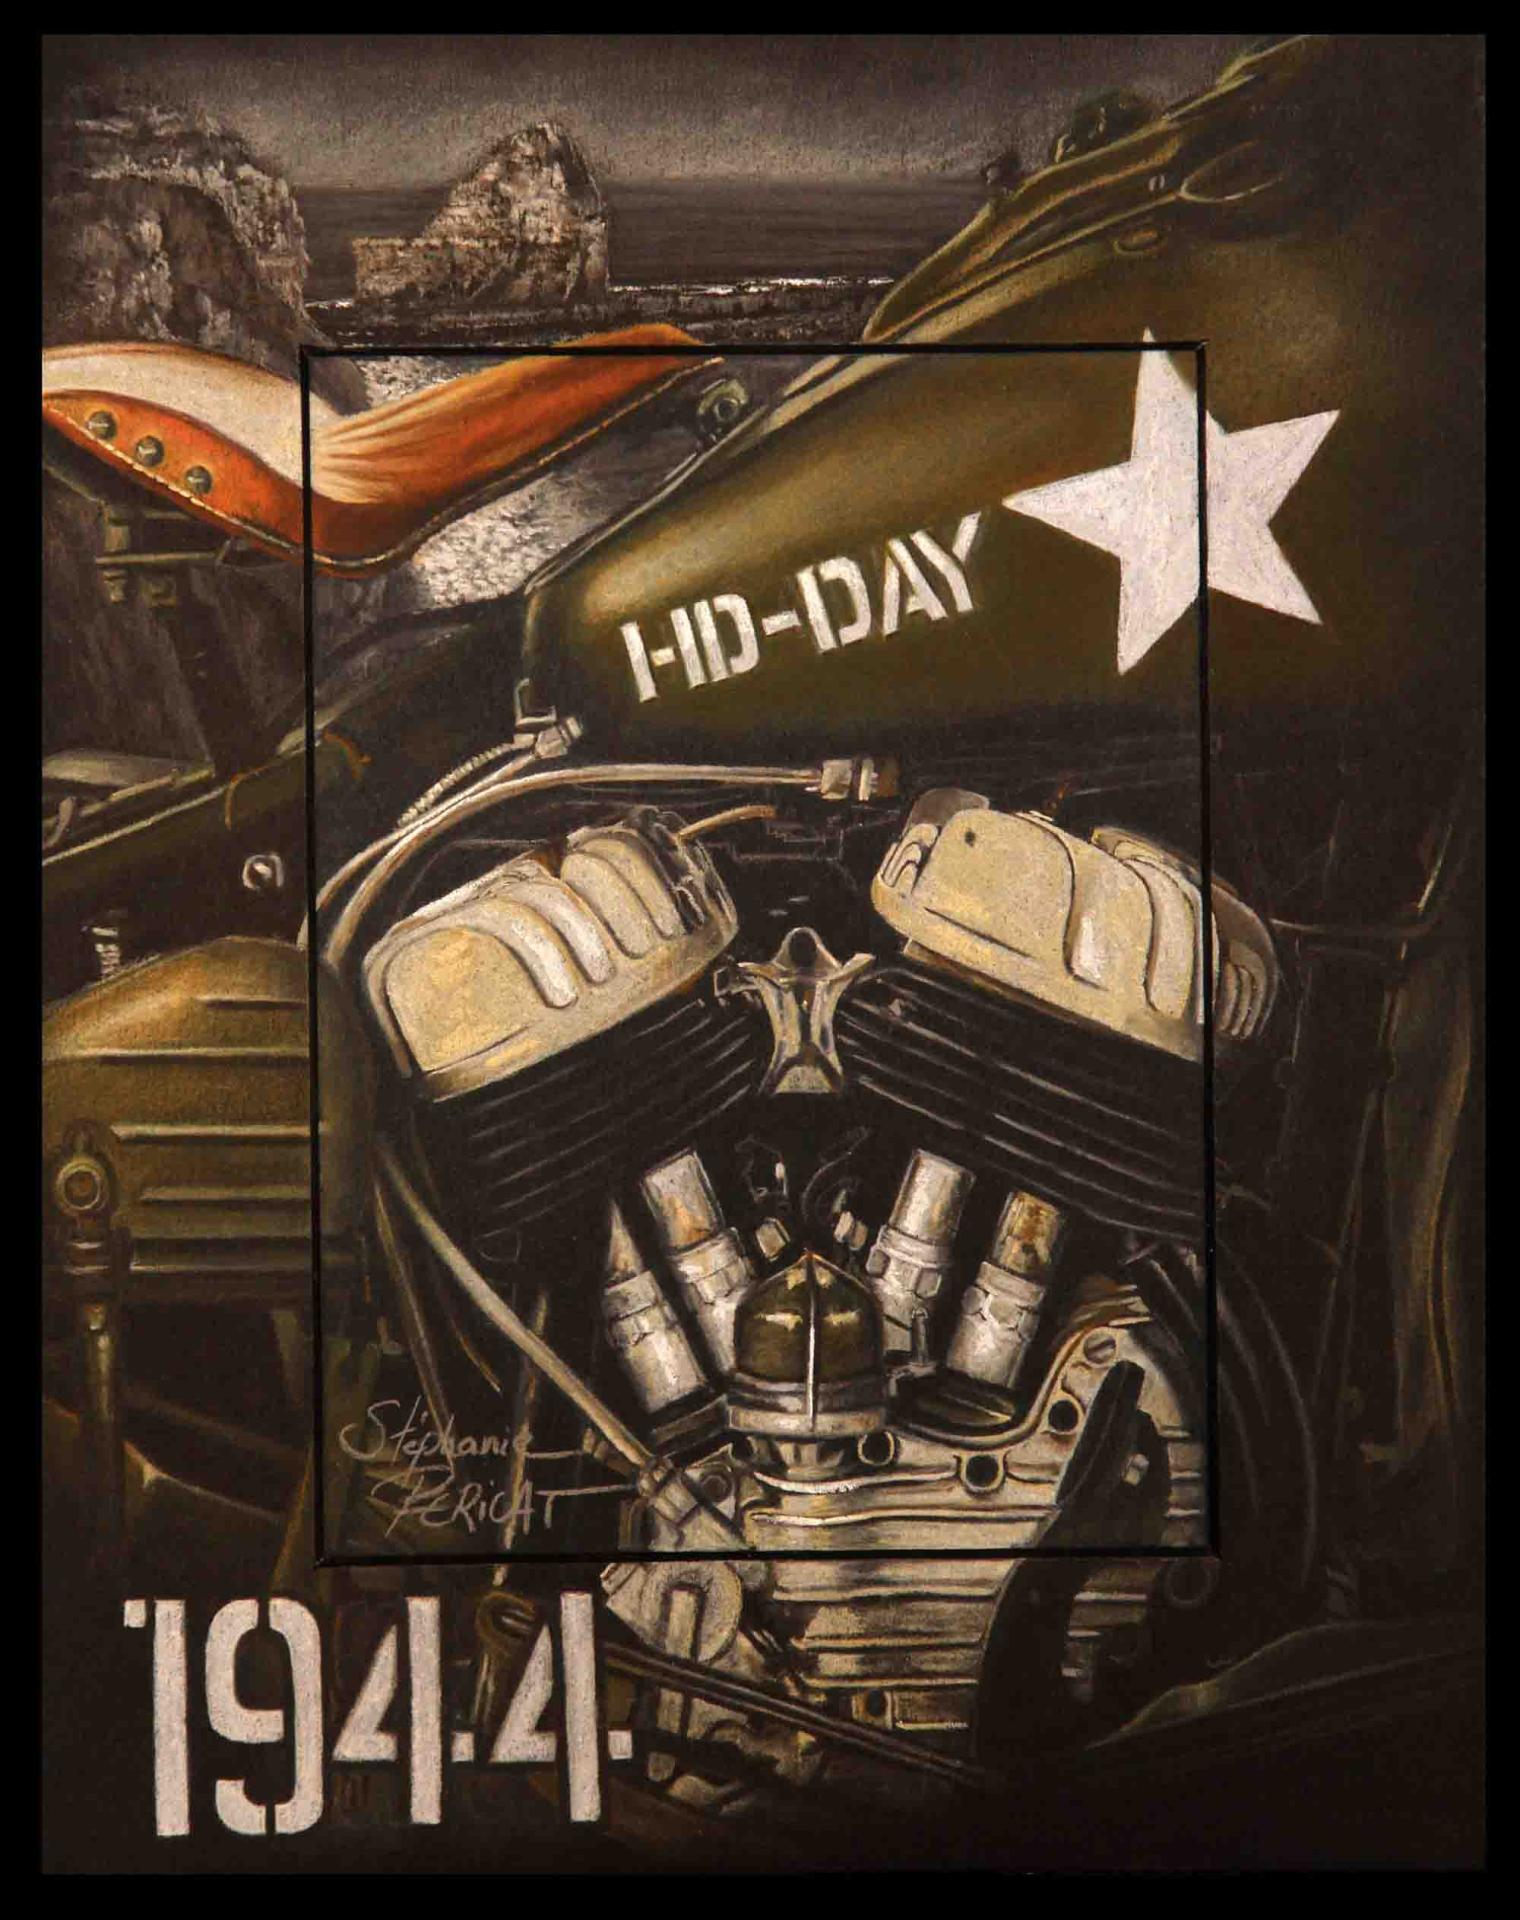 HD-DAY A heroic legend - 24 x 30 cm - Disponible